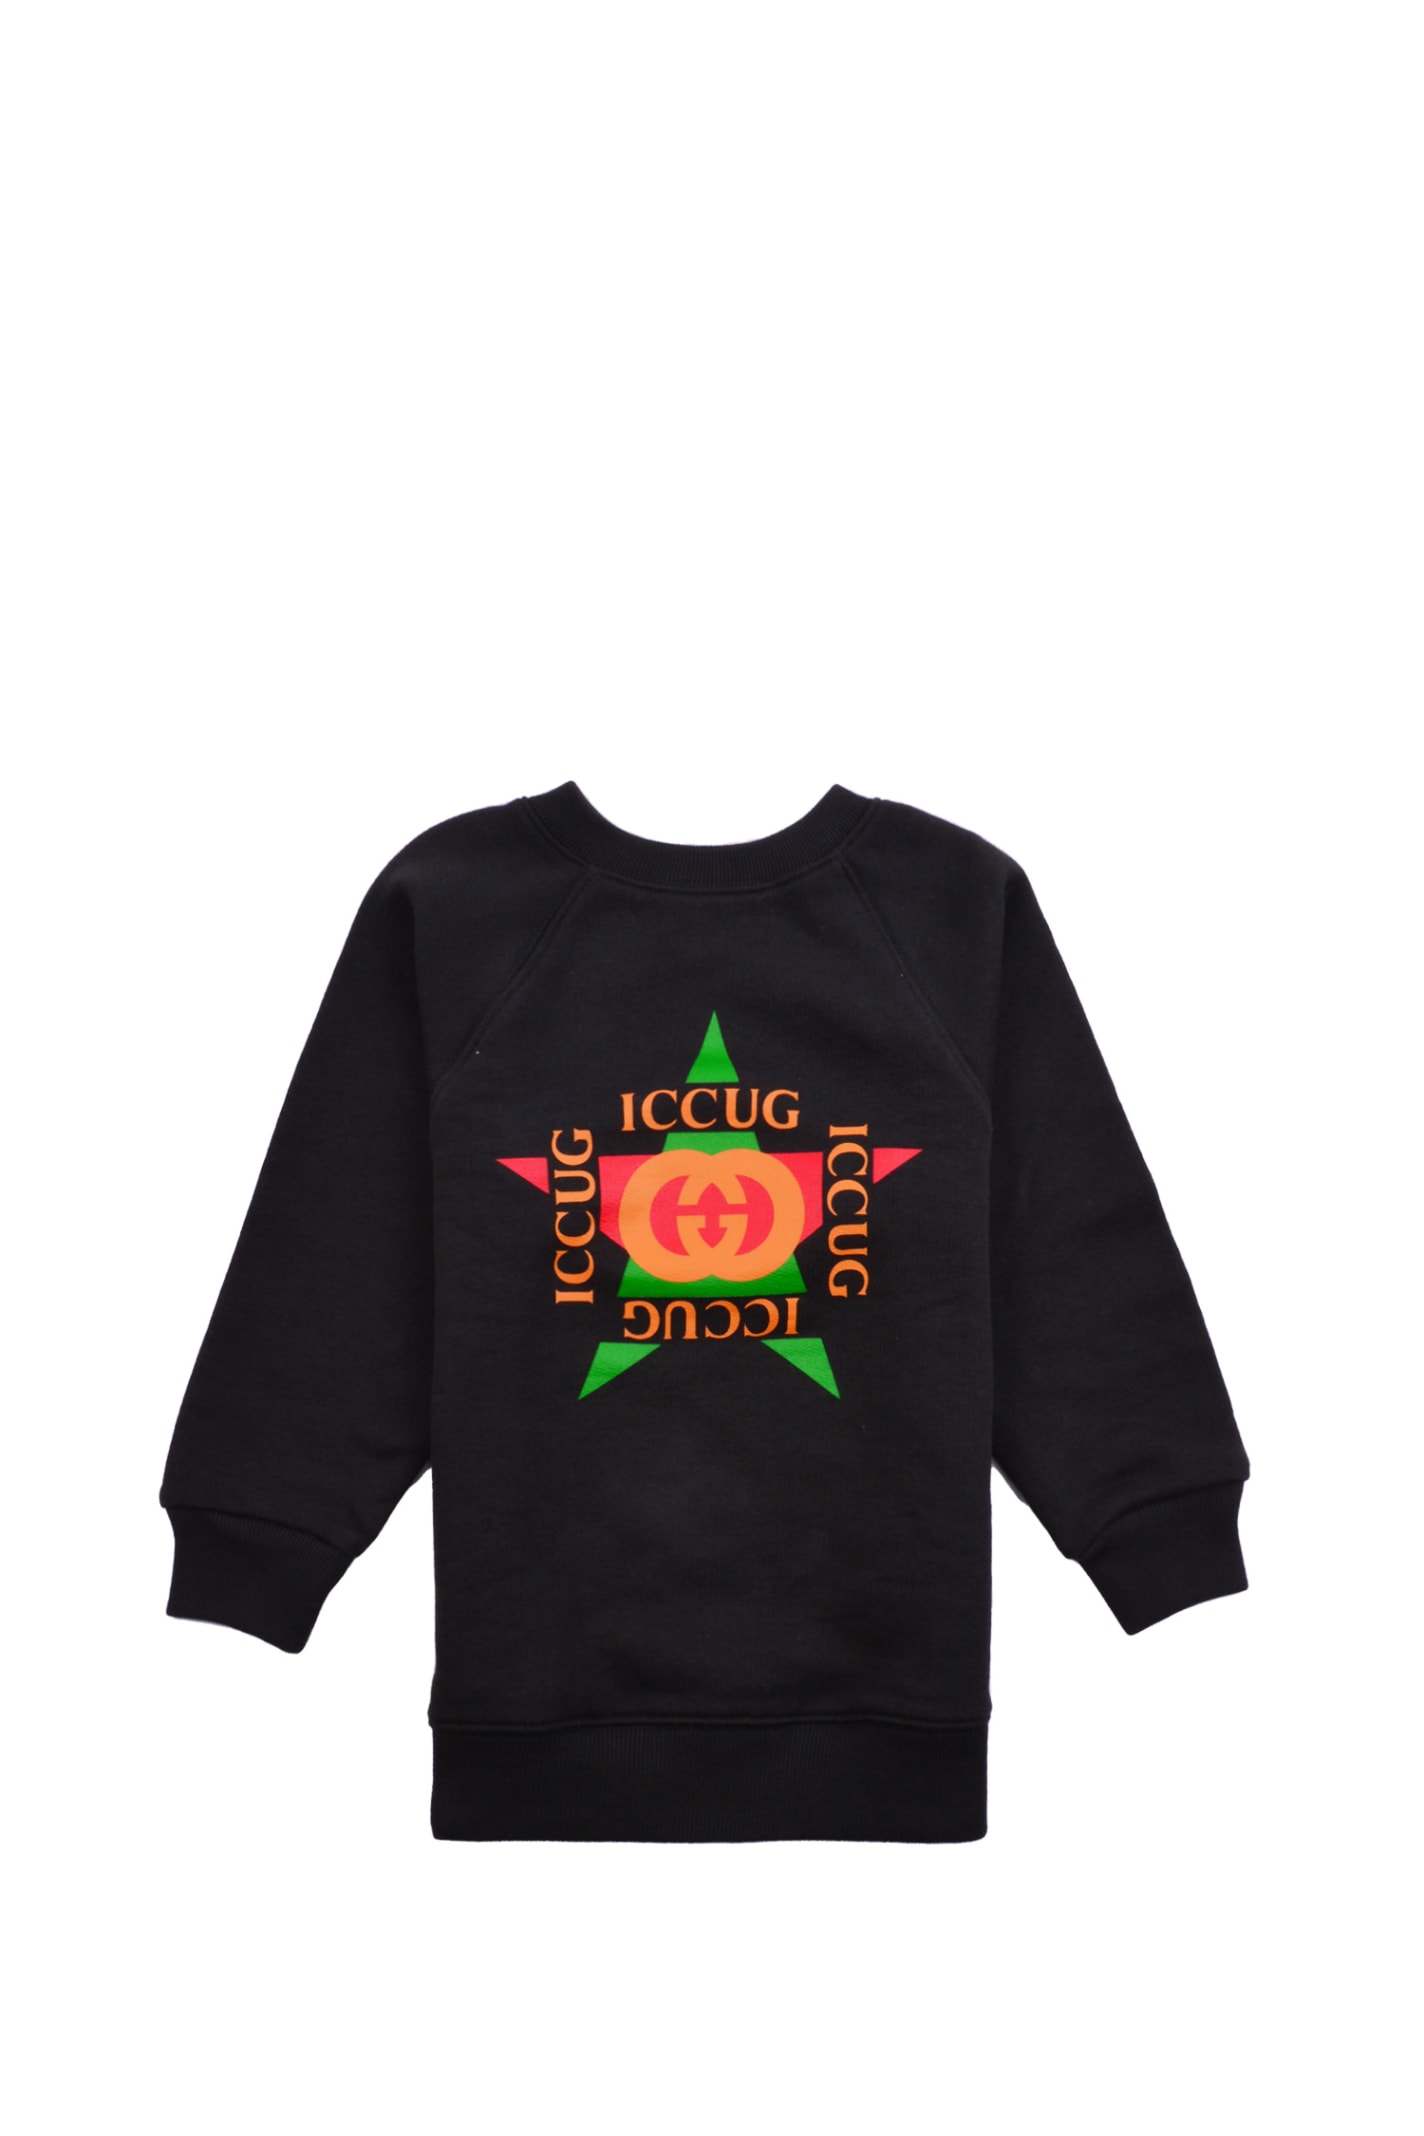 Gucci Kids' Printed Sweatshirt In Back